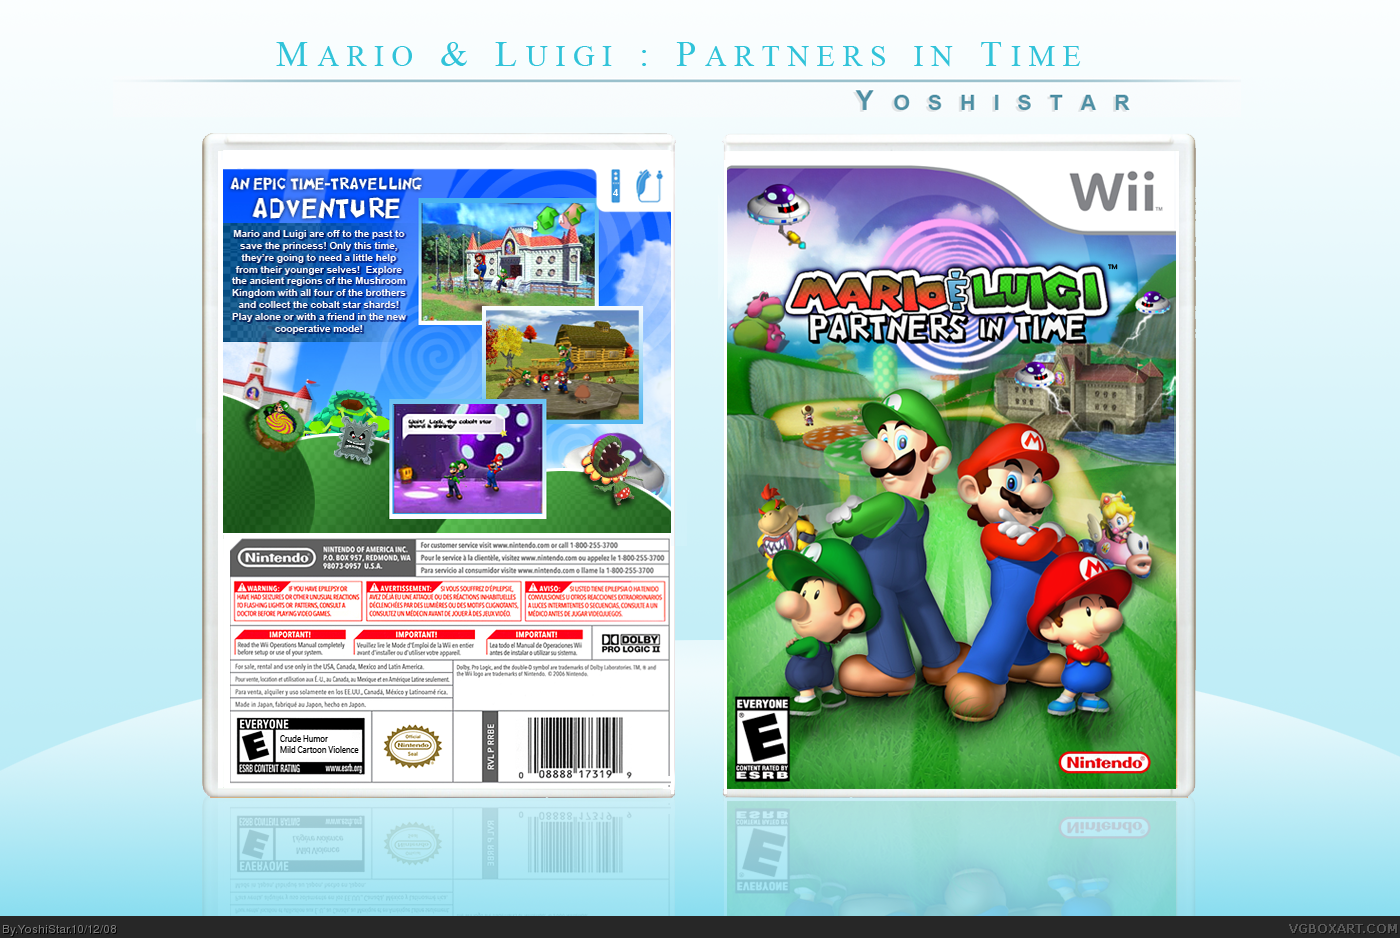 Mario & Luigi: Partners in Time box cover